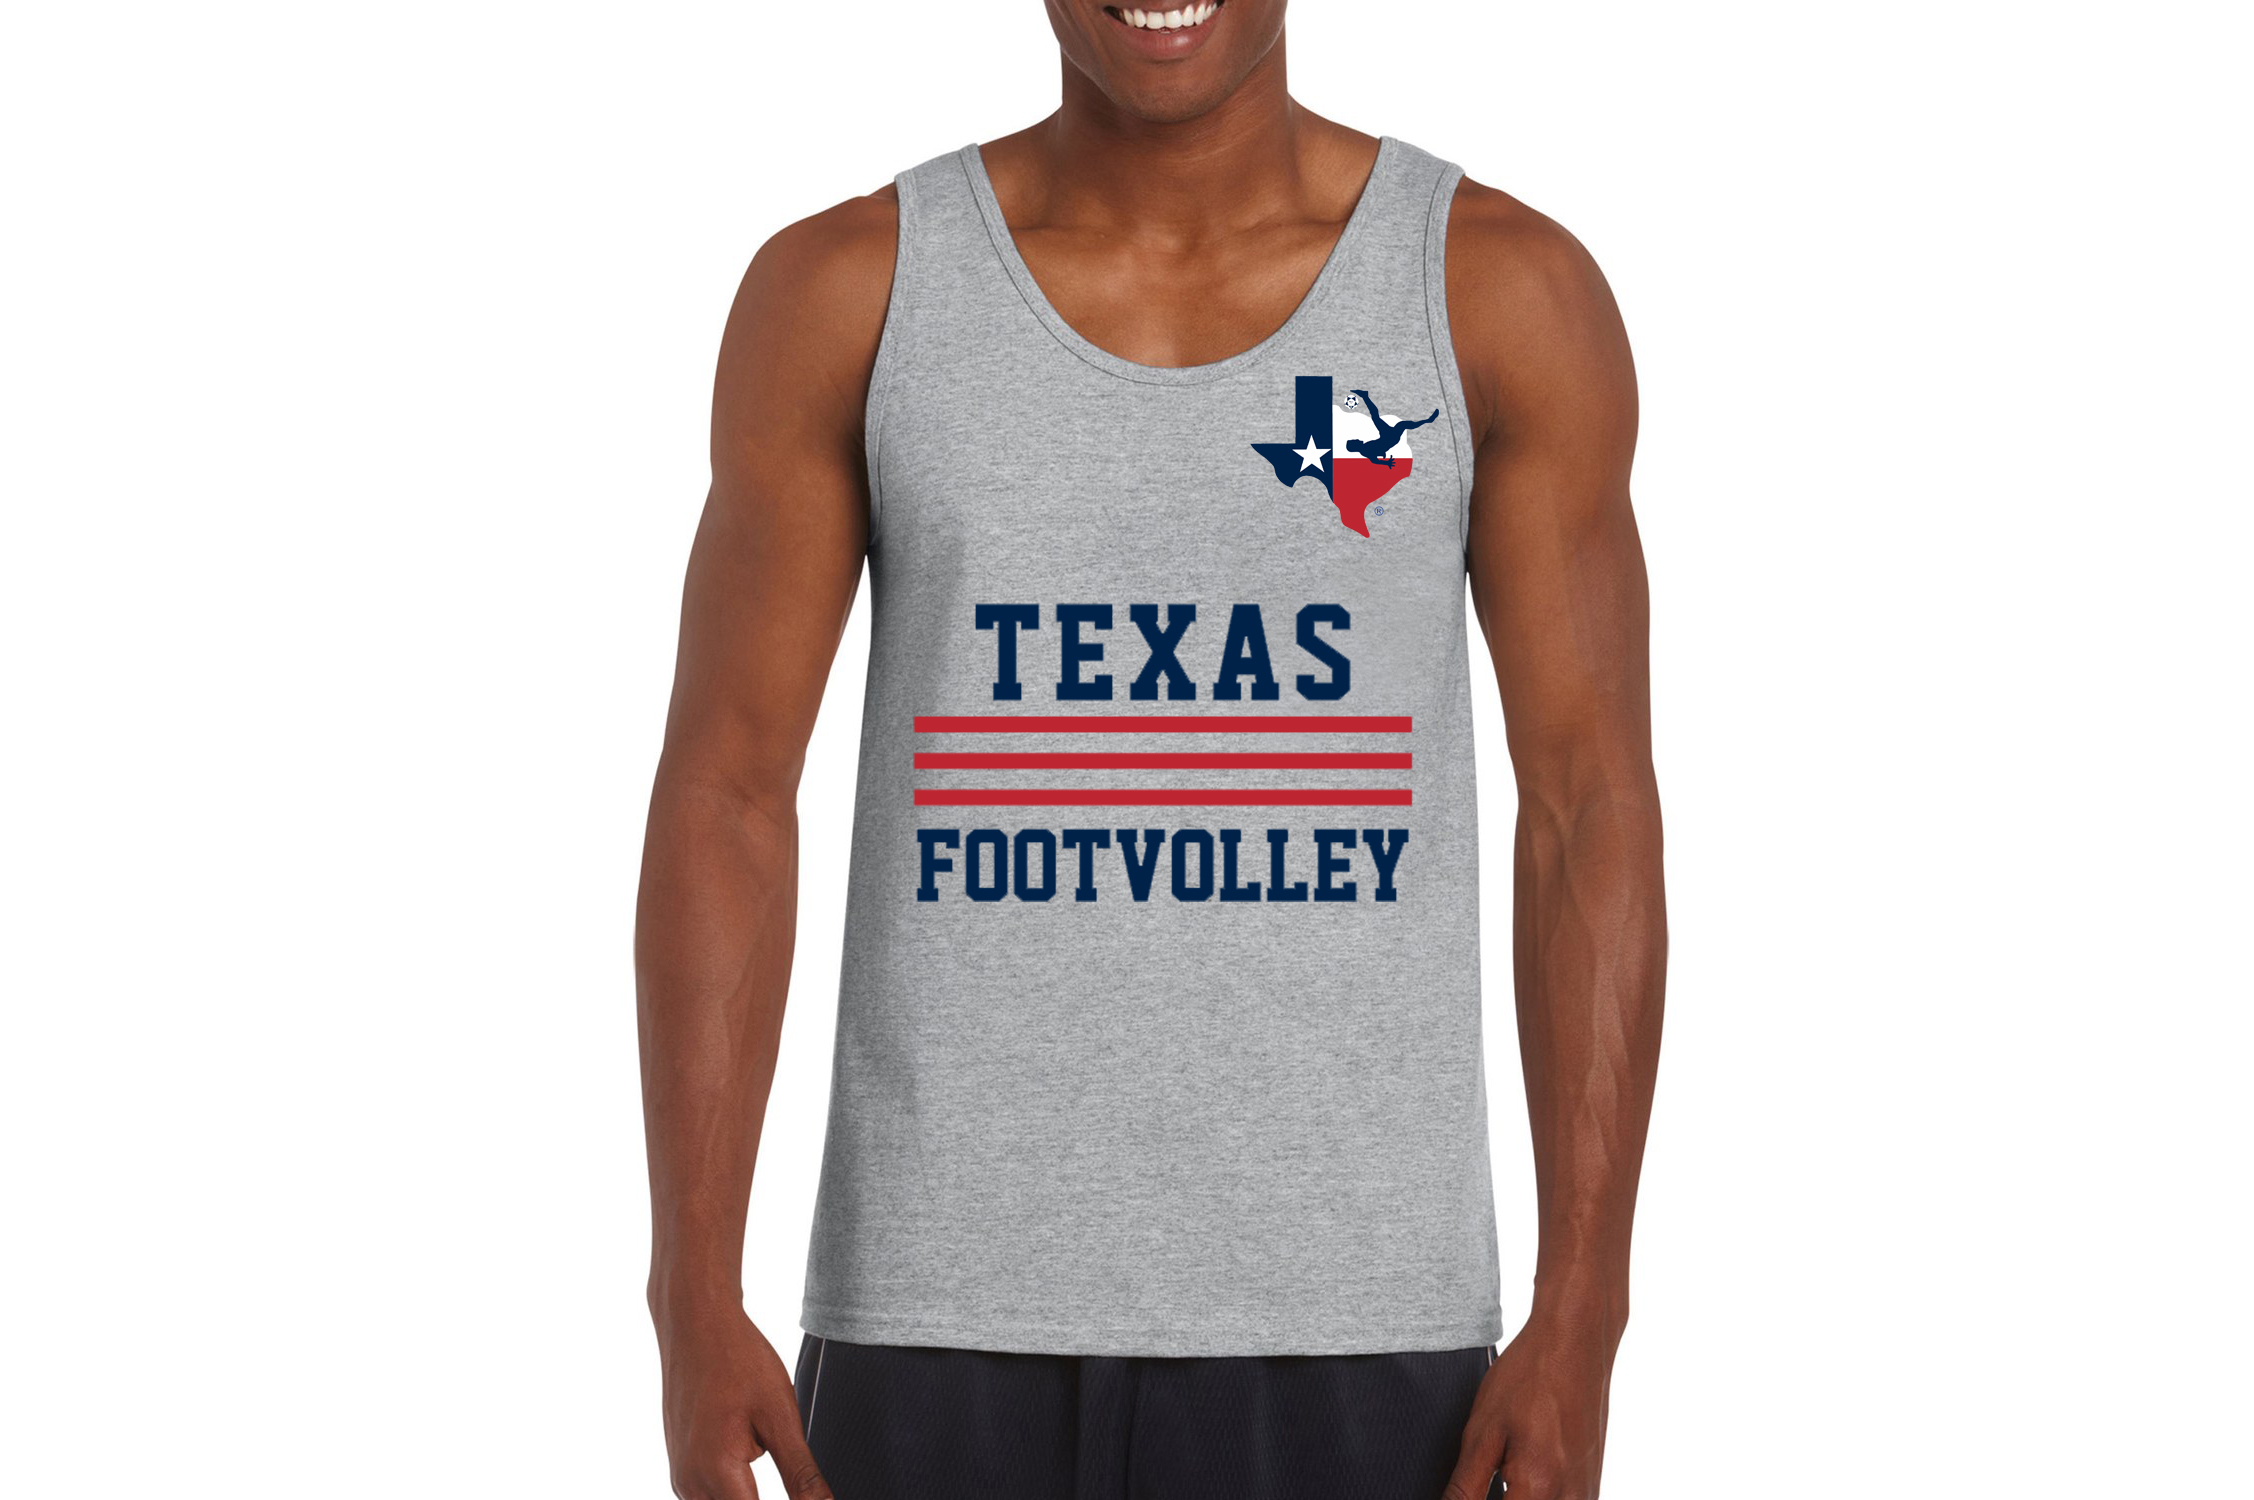 Grey Tank Top - Texas Footvolley